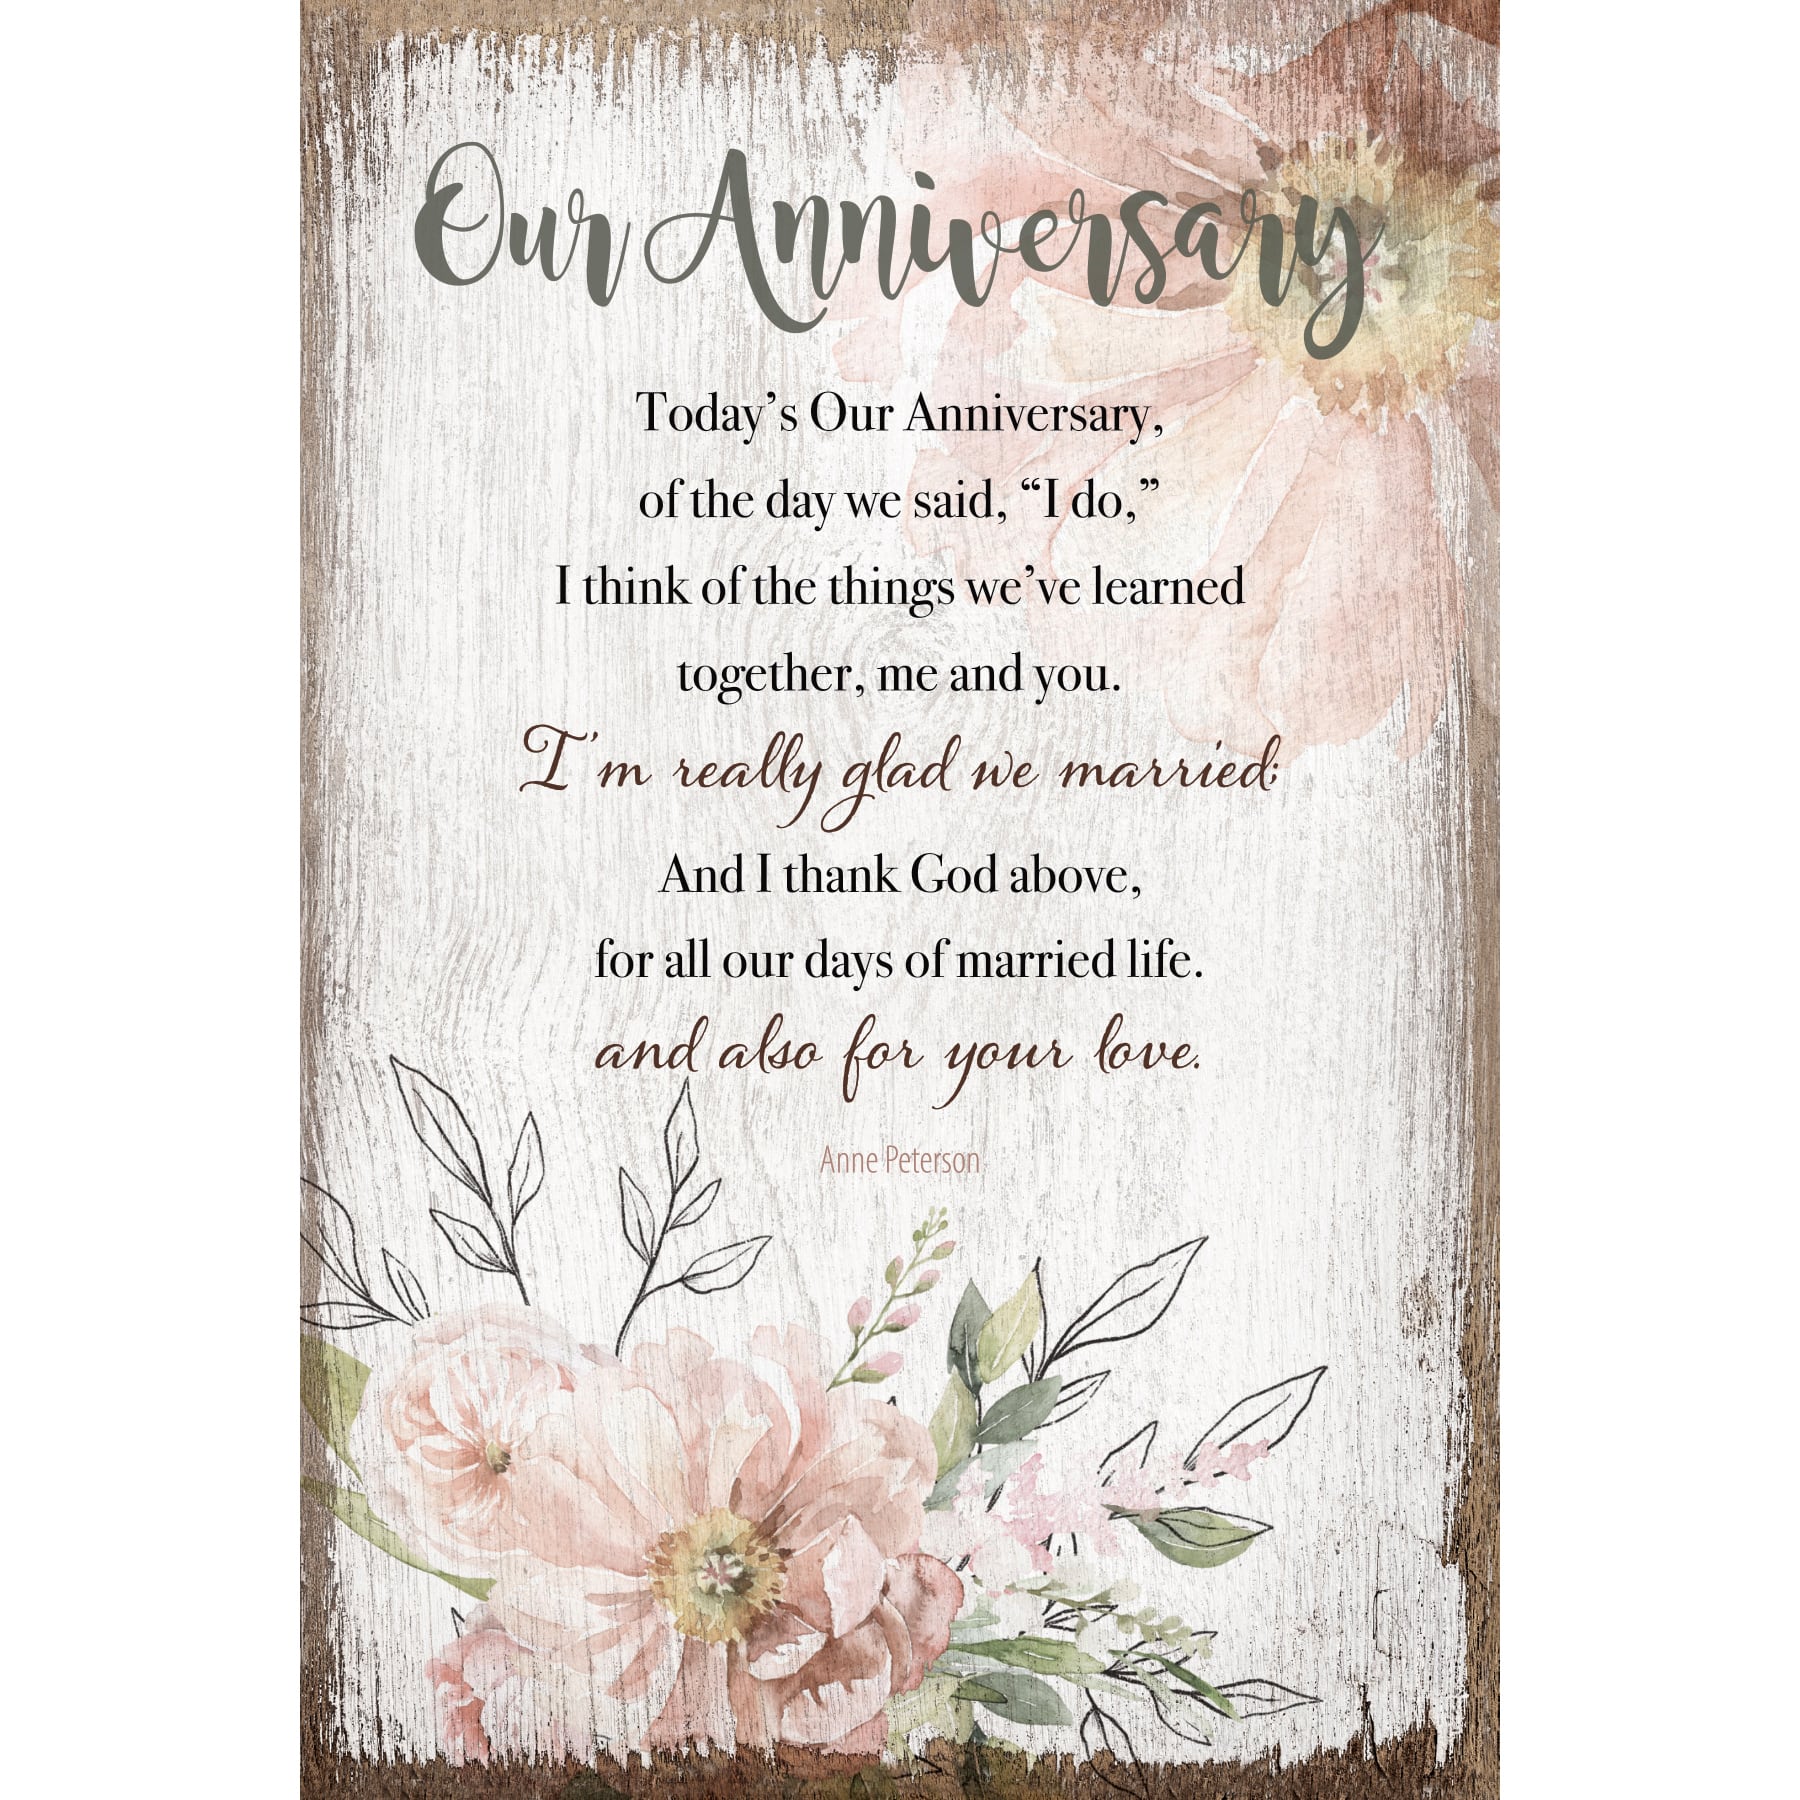 30th wedding anniversary poems